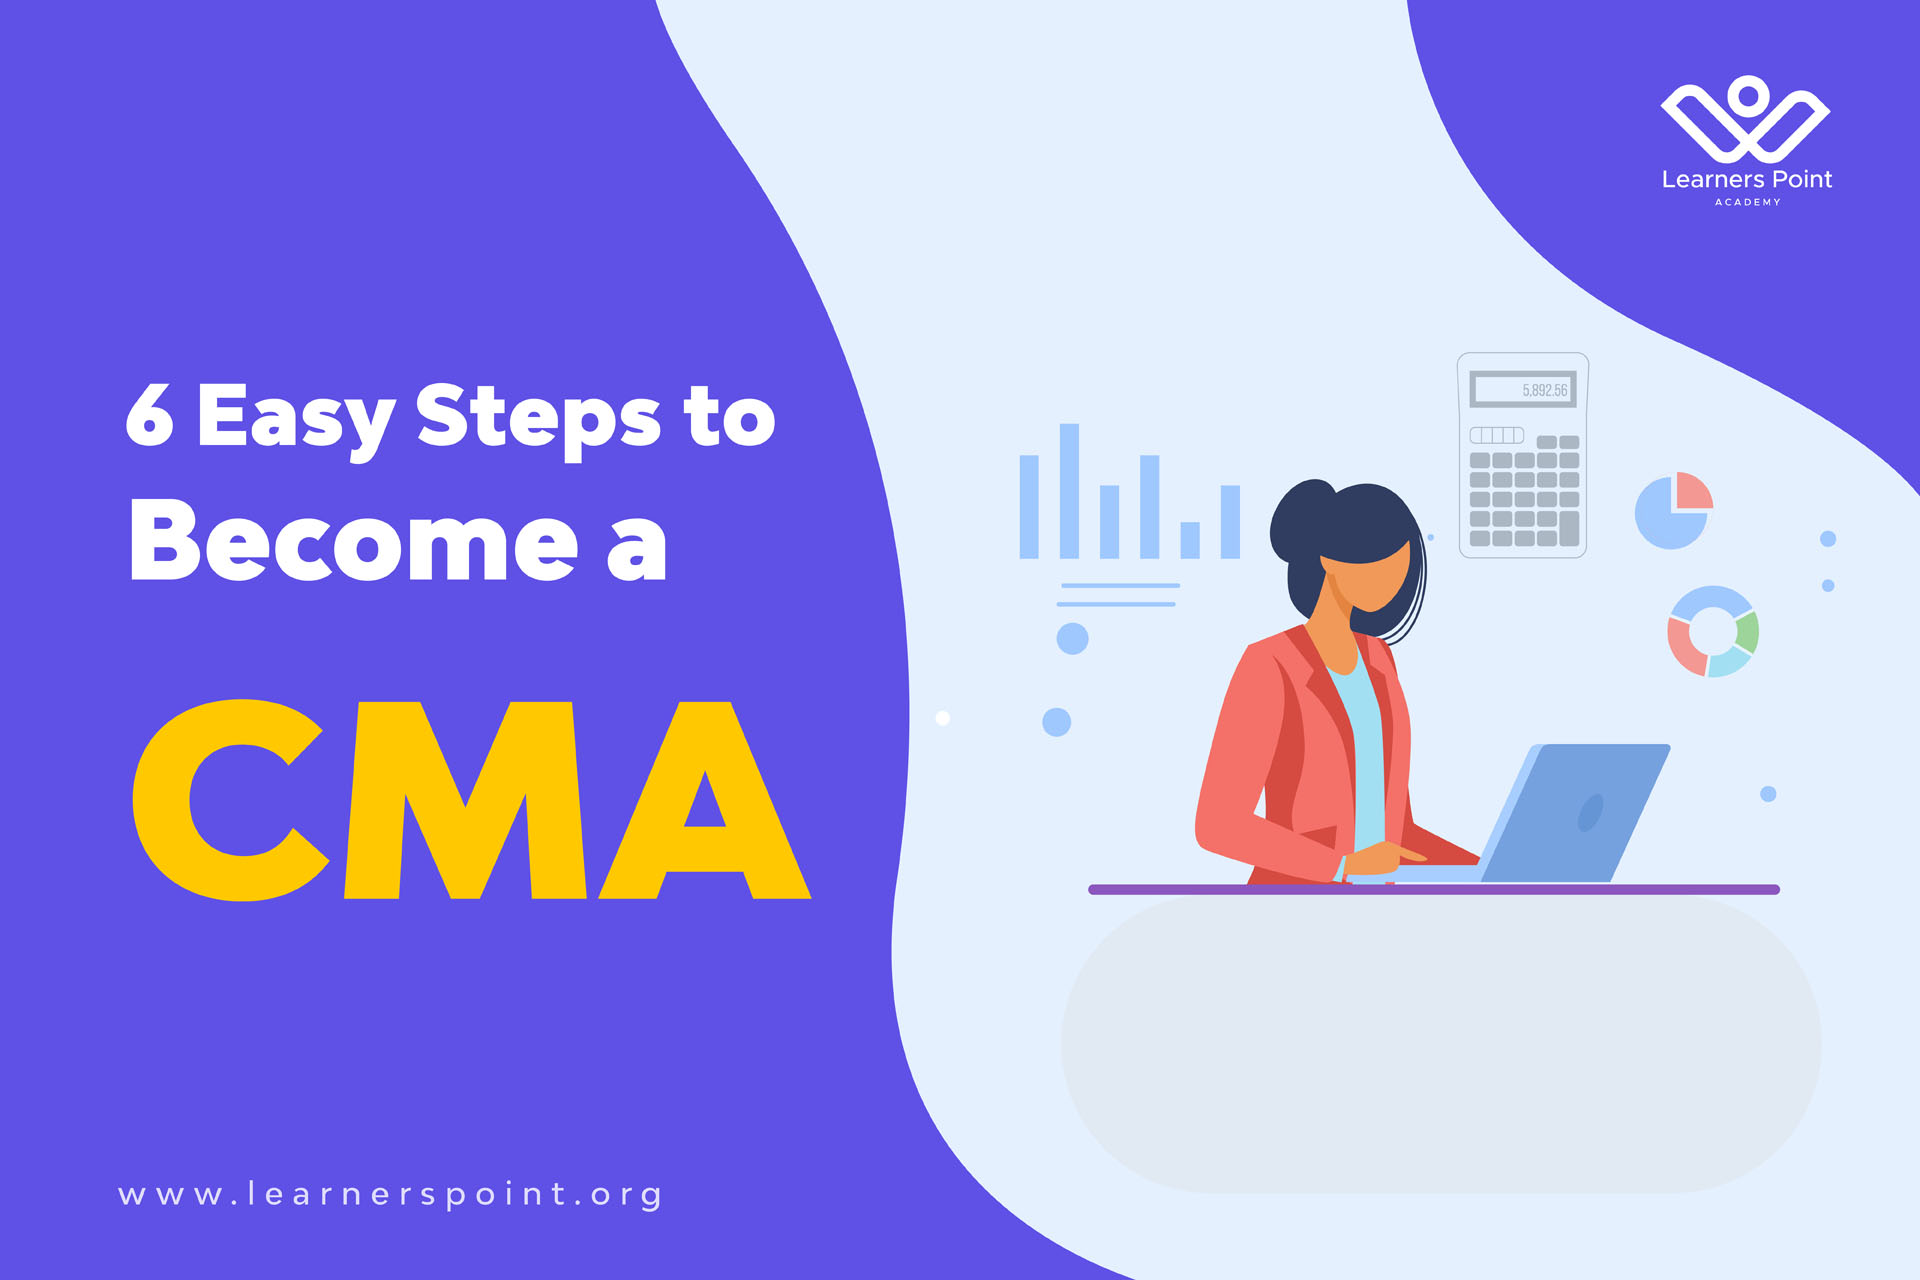 6 Easy Steps to Become a CMA